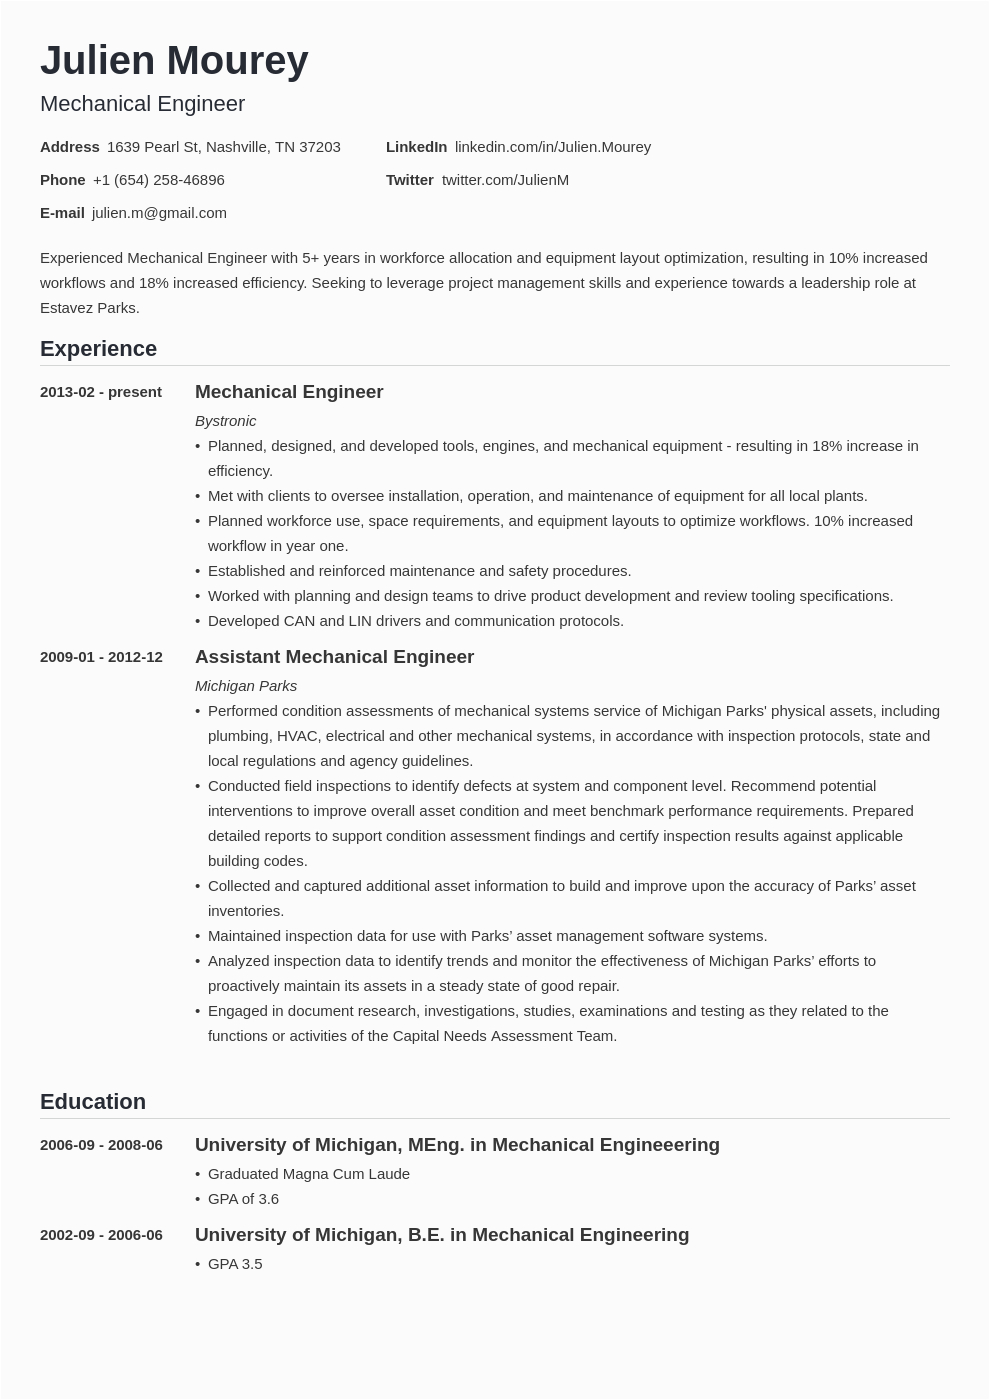 Sample Resume for Mechanical Engineer Fresher Pdf Resume format for Freshers Mechanical Engineers Pdf Free